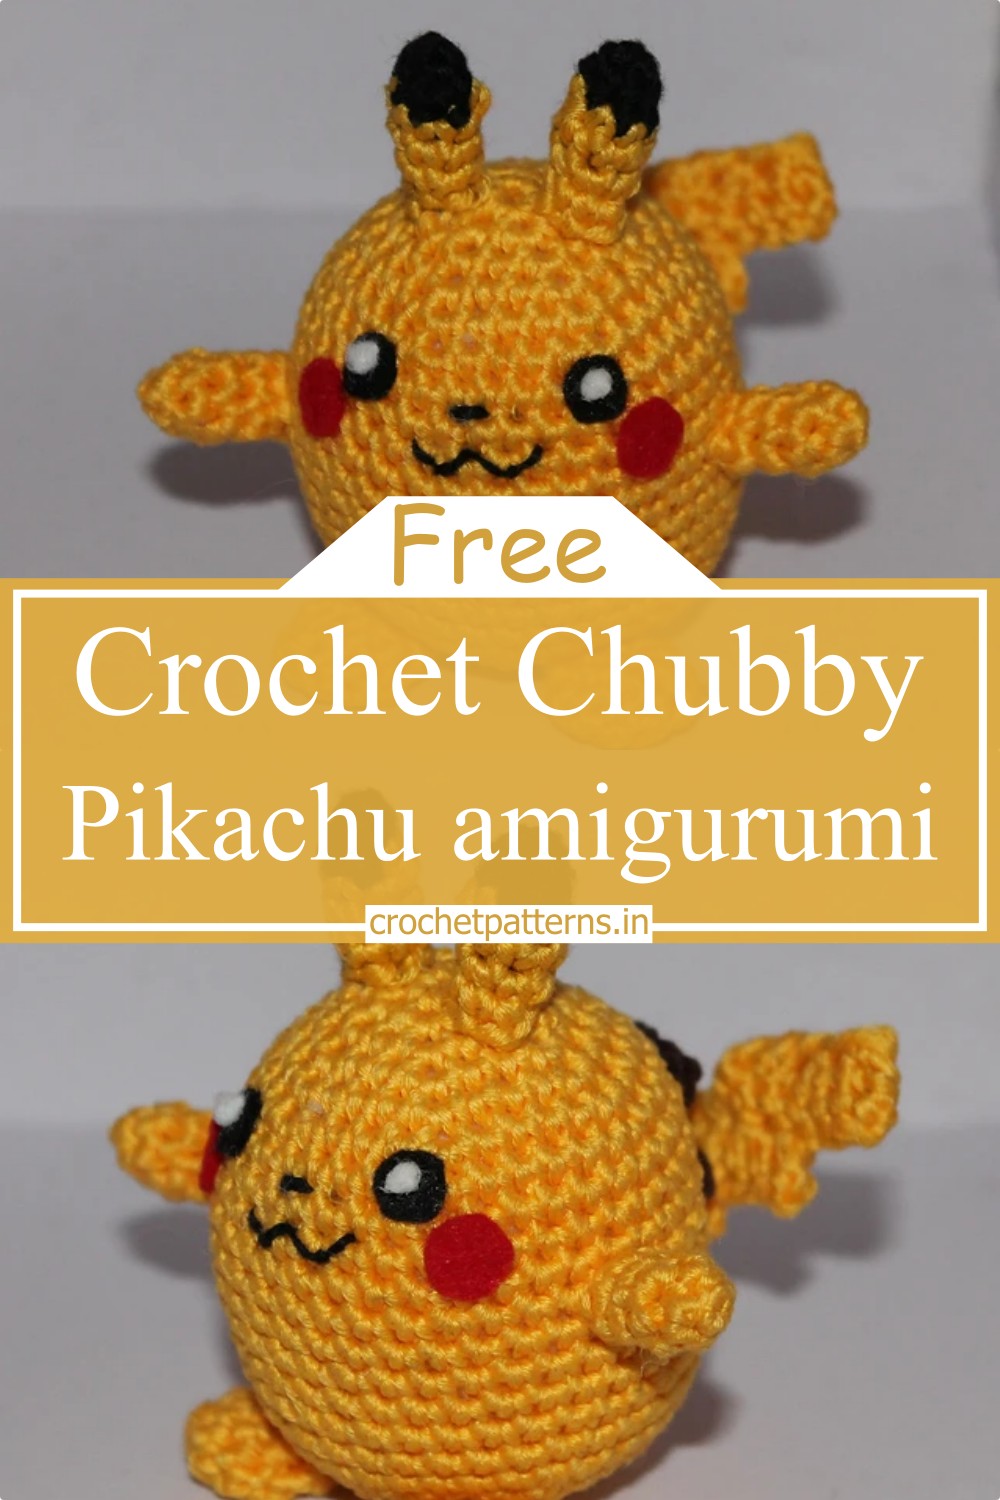 Chubby Pikachu amigurumi